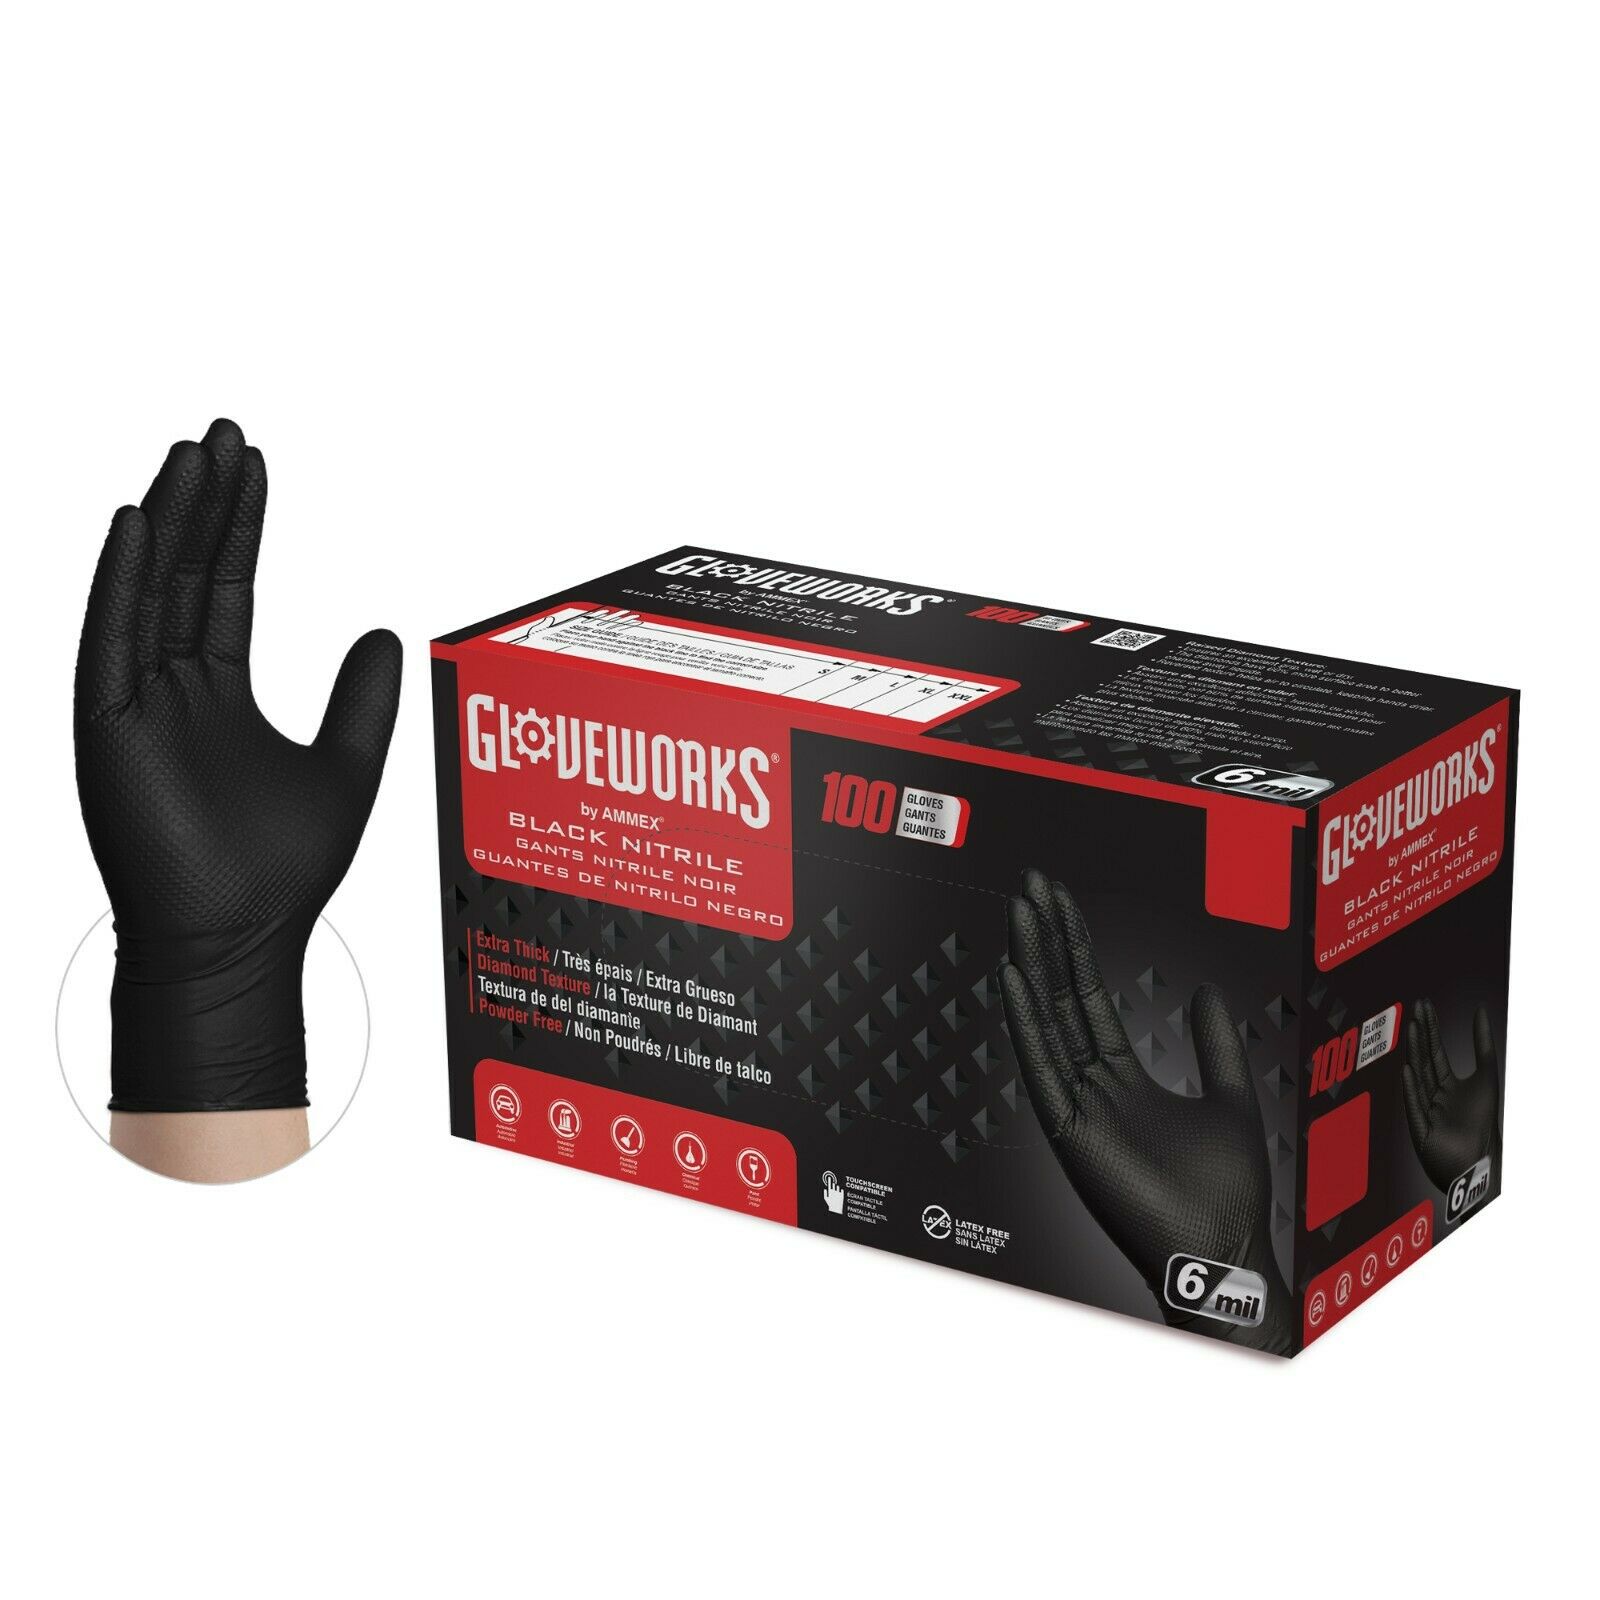 1000/cs Gloveworks Hd 6 Mil Gwbn Latex Free Nitrile Disposable Gloves - Black